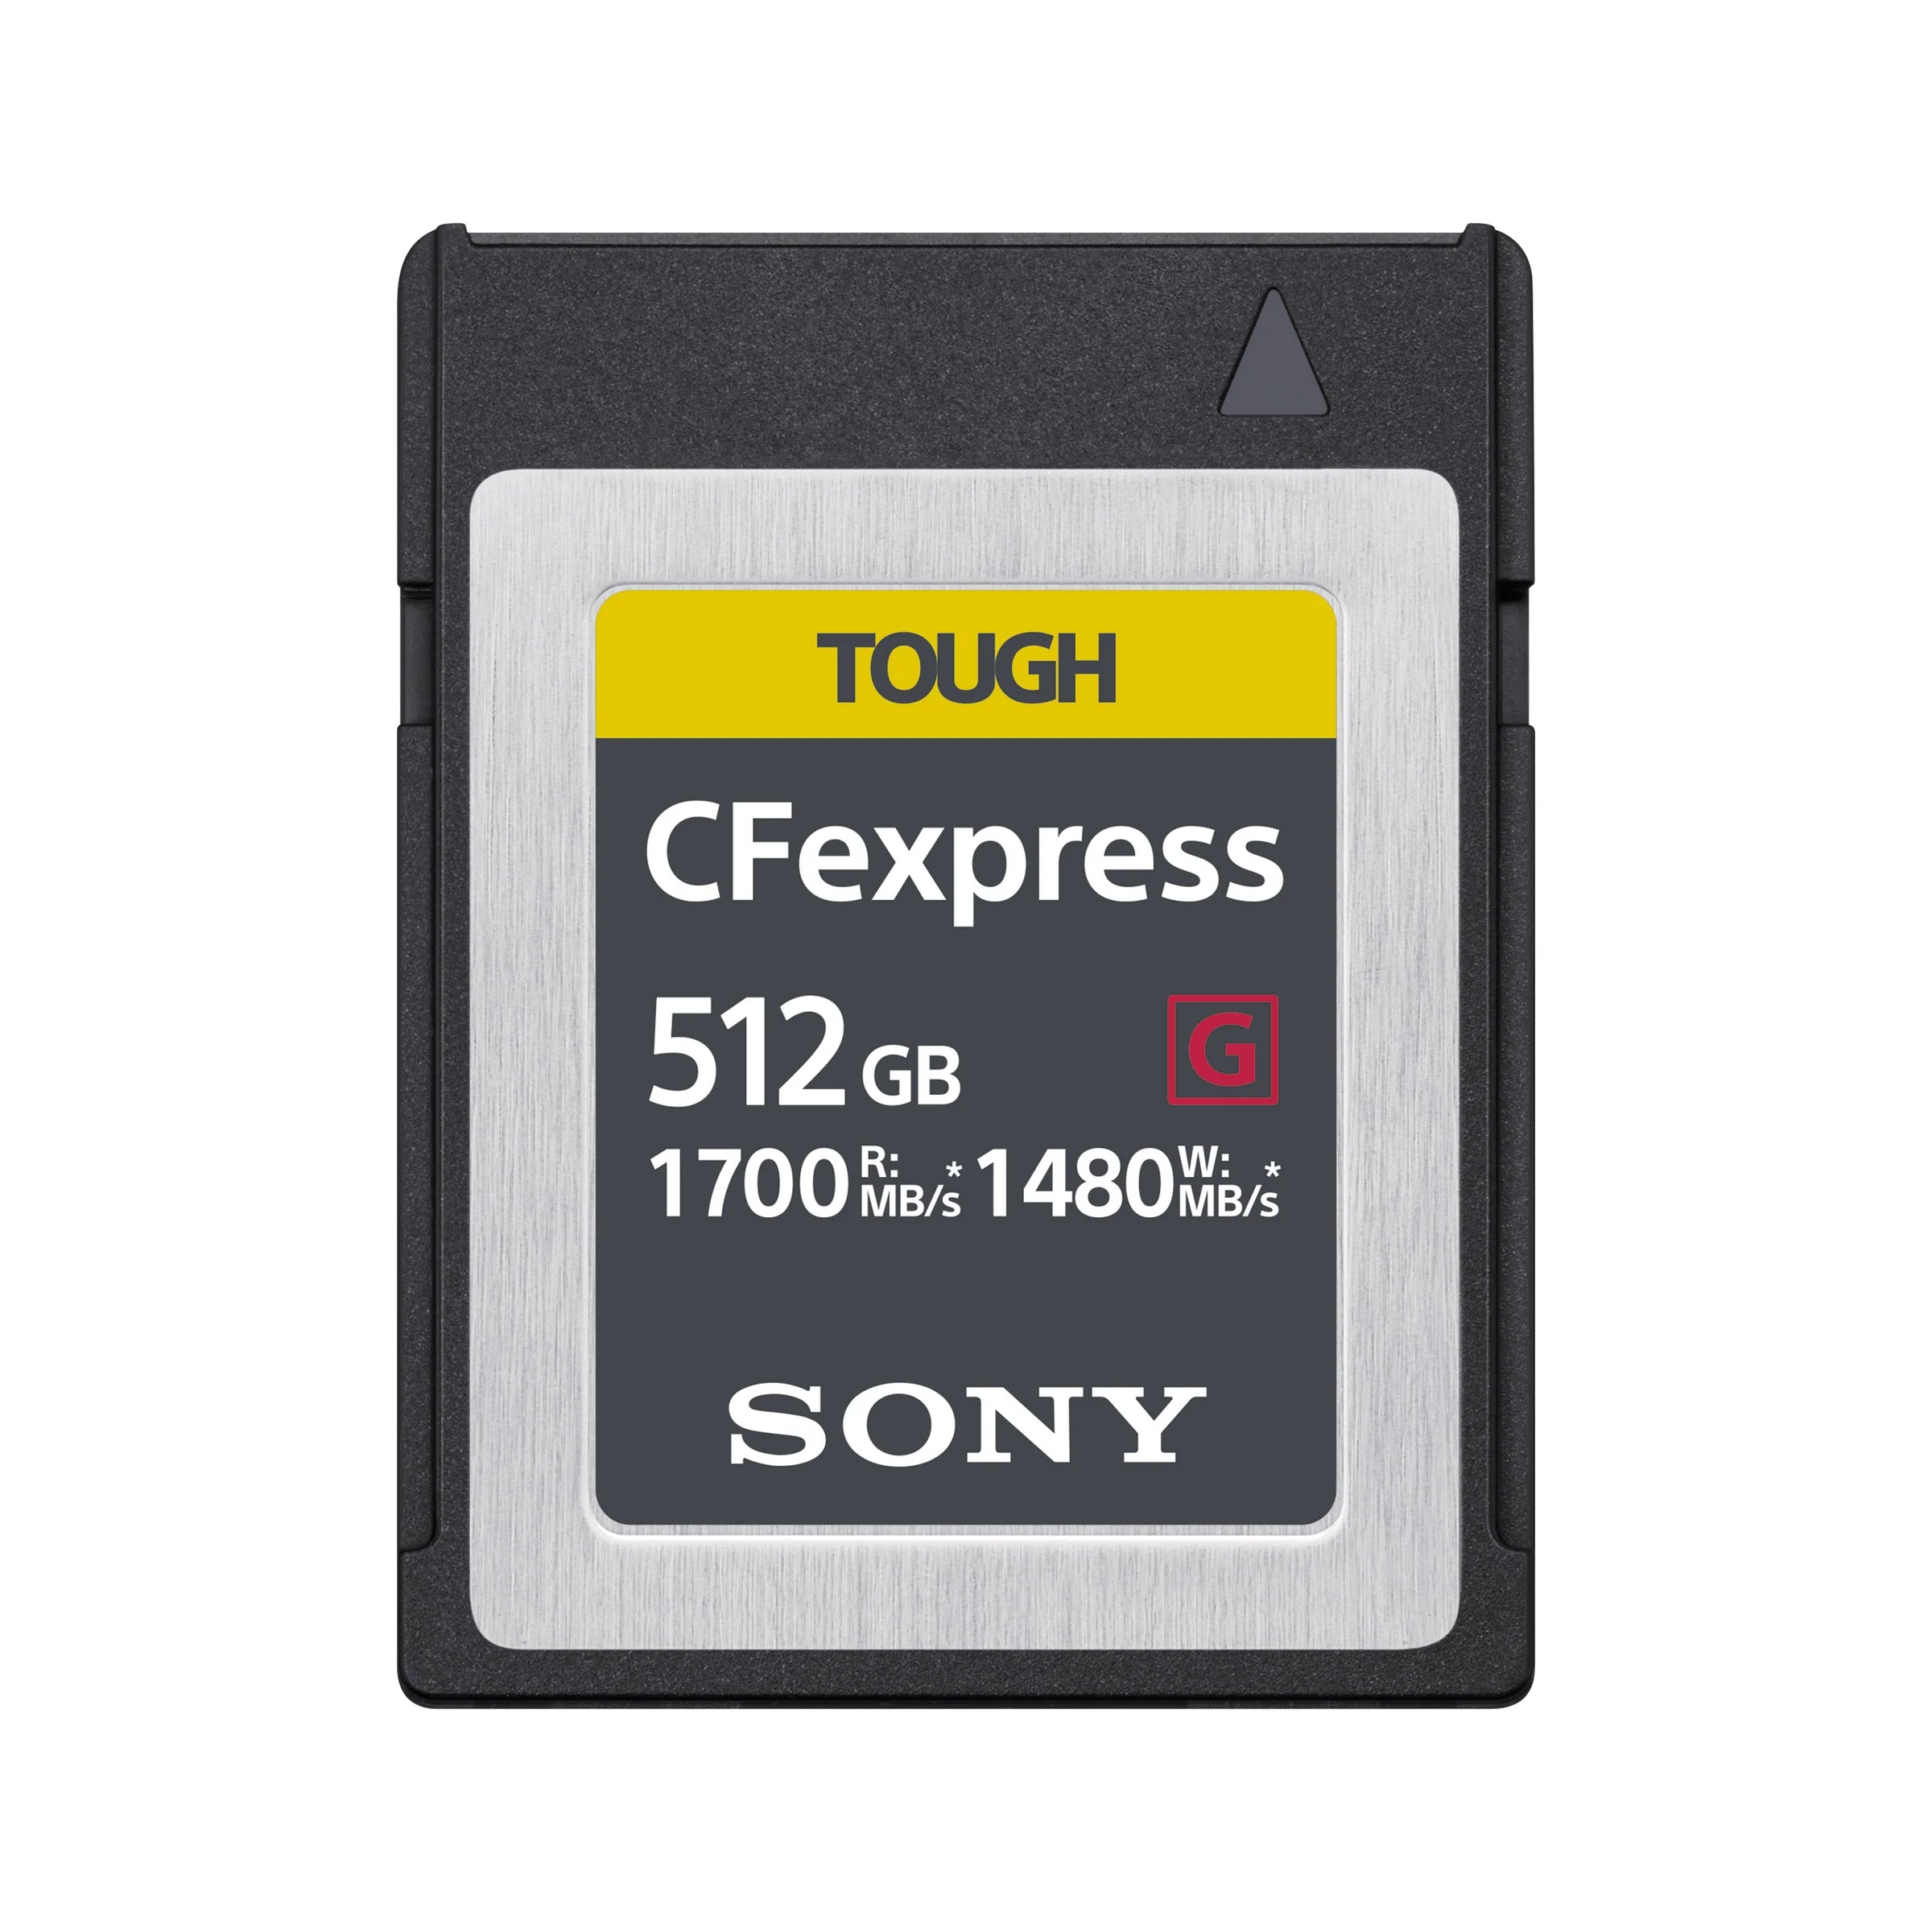 CEB-G Series CFexpress Type B Memory Card